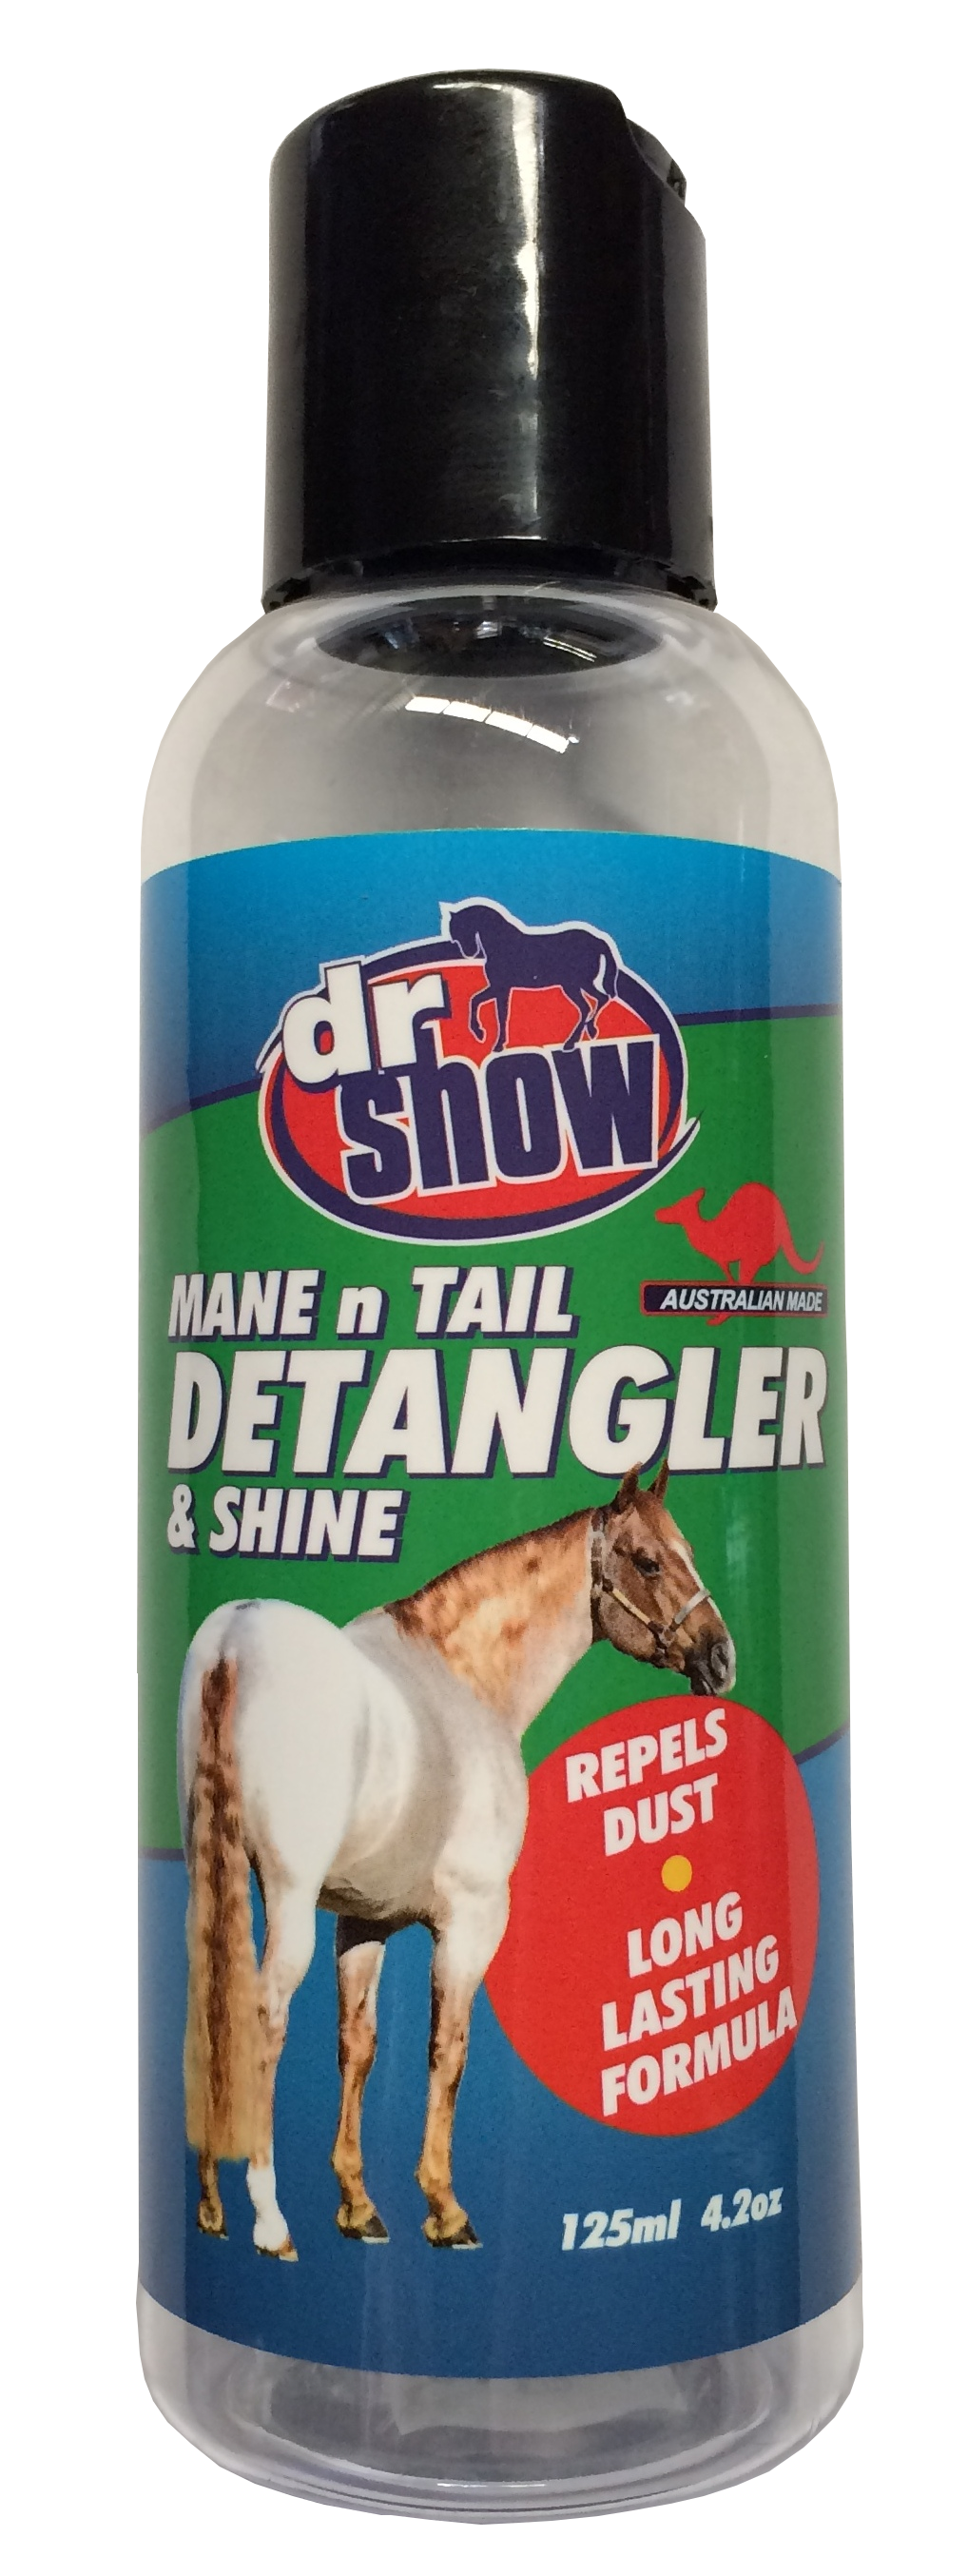 Dr Show Mane and Tail Detangler N Shine